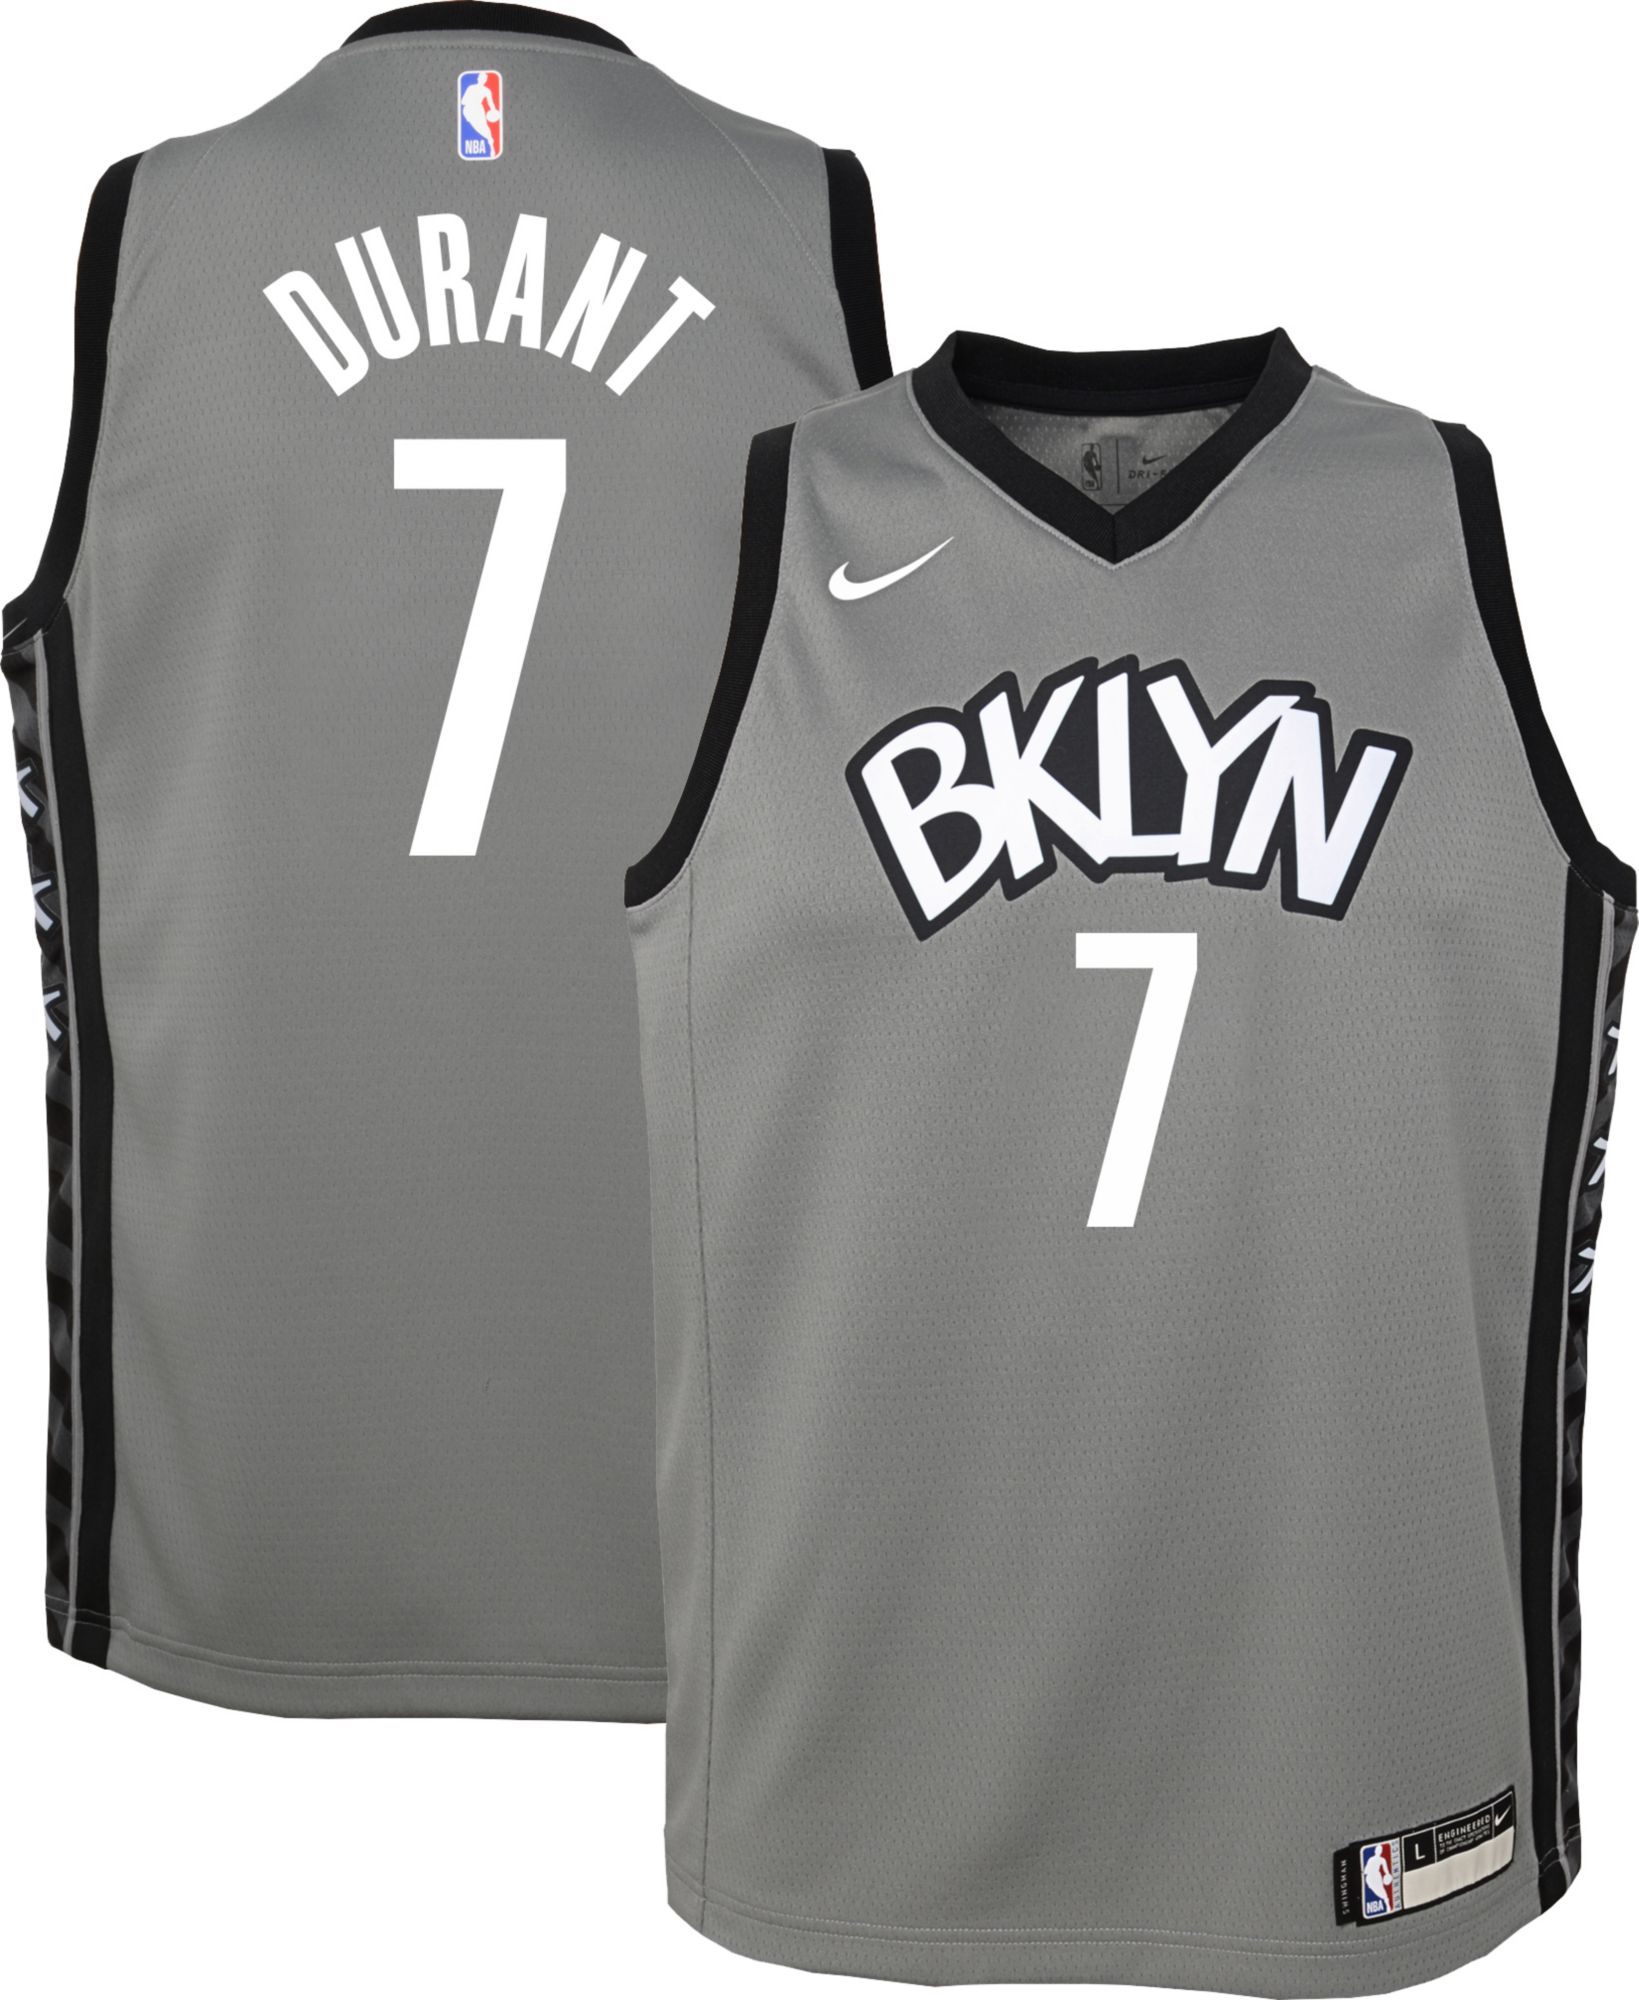 Klassische Kevin Durant #7 Brooklyn Nets Basketball Jerseys Stitched Grau 